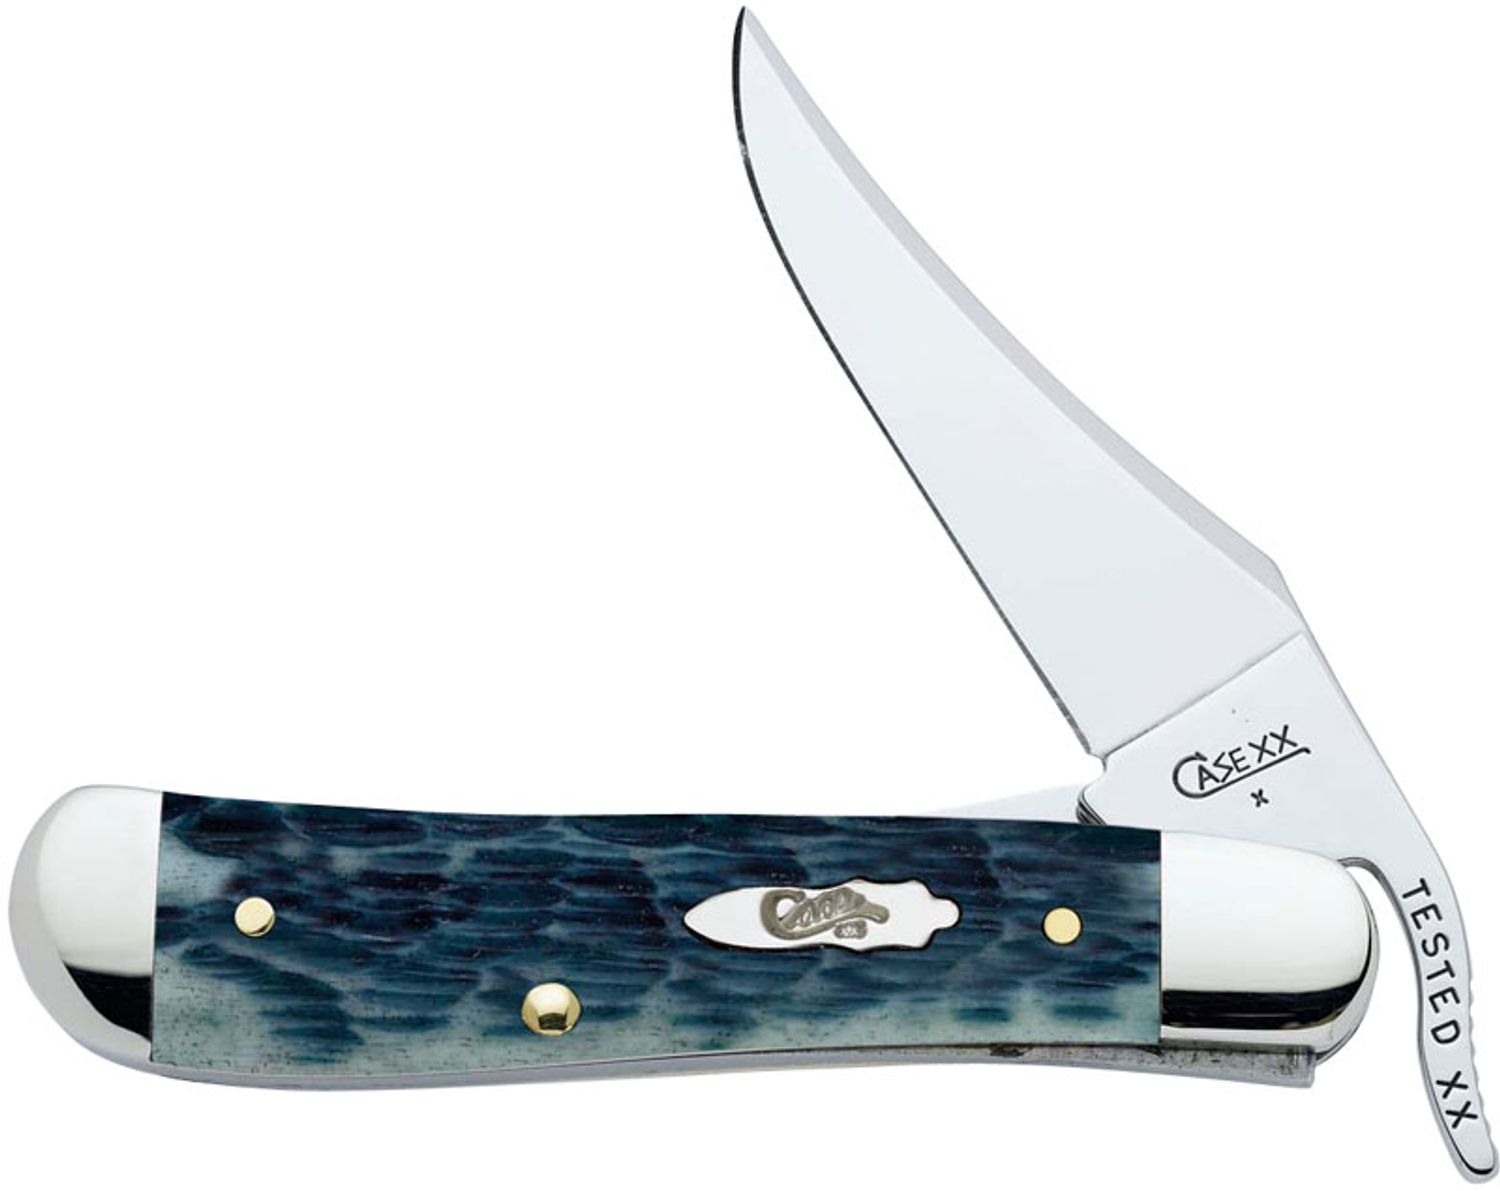 4 pc. Set Blue Edition – WASABI Knives